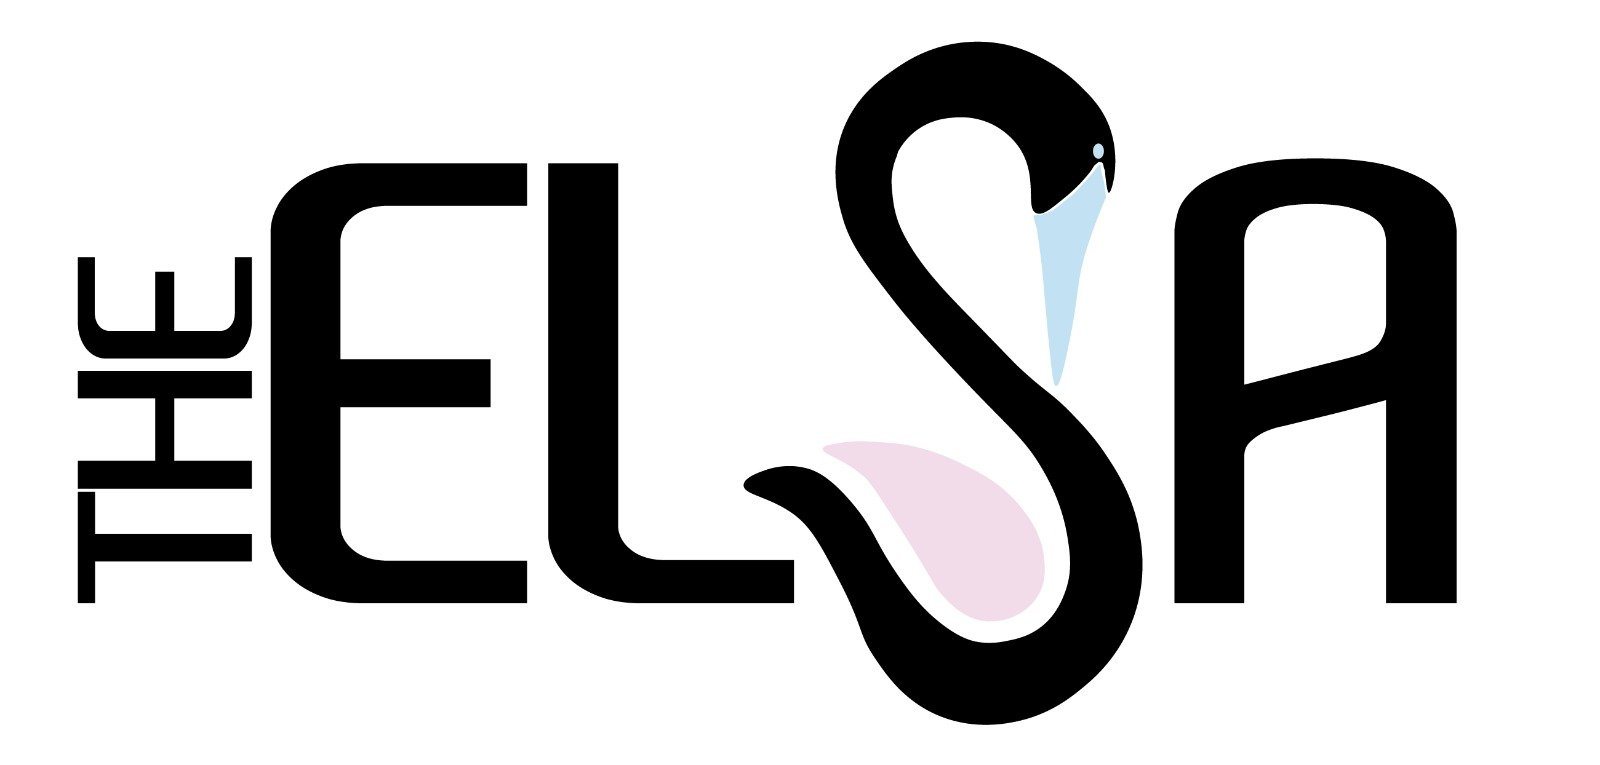 The Elsa Logo